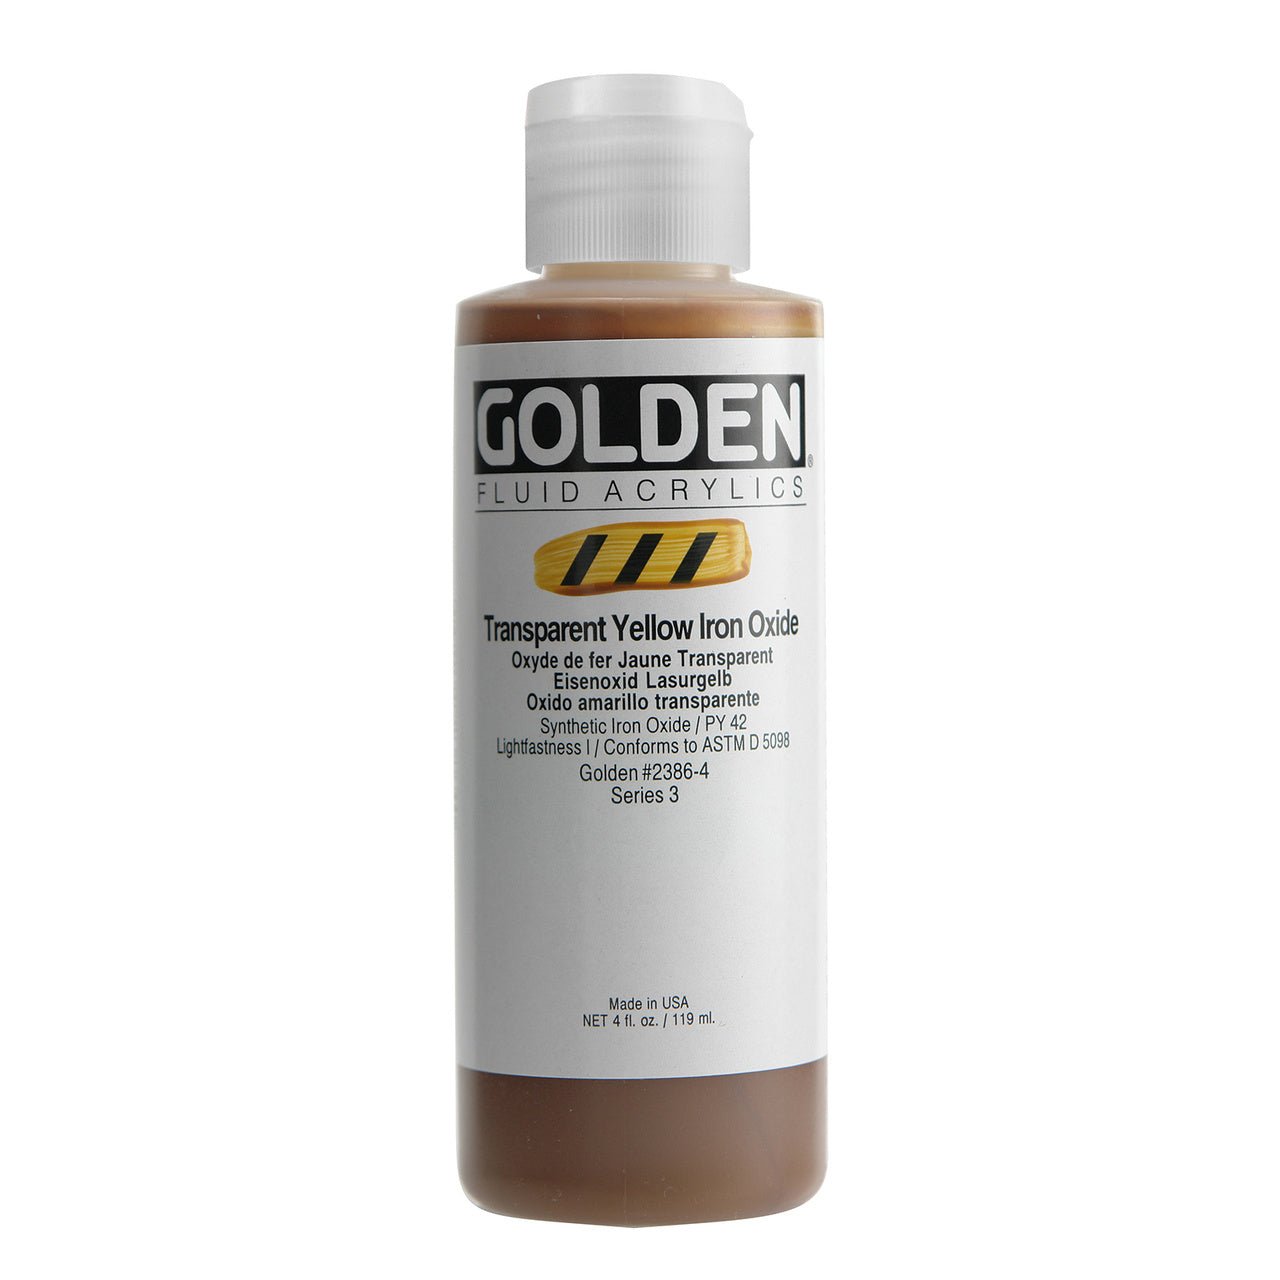 Golden Fluid Acrylic Transparent Yellow iron Oxide 4 oz - merriartist.com